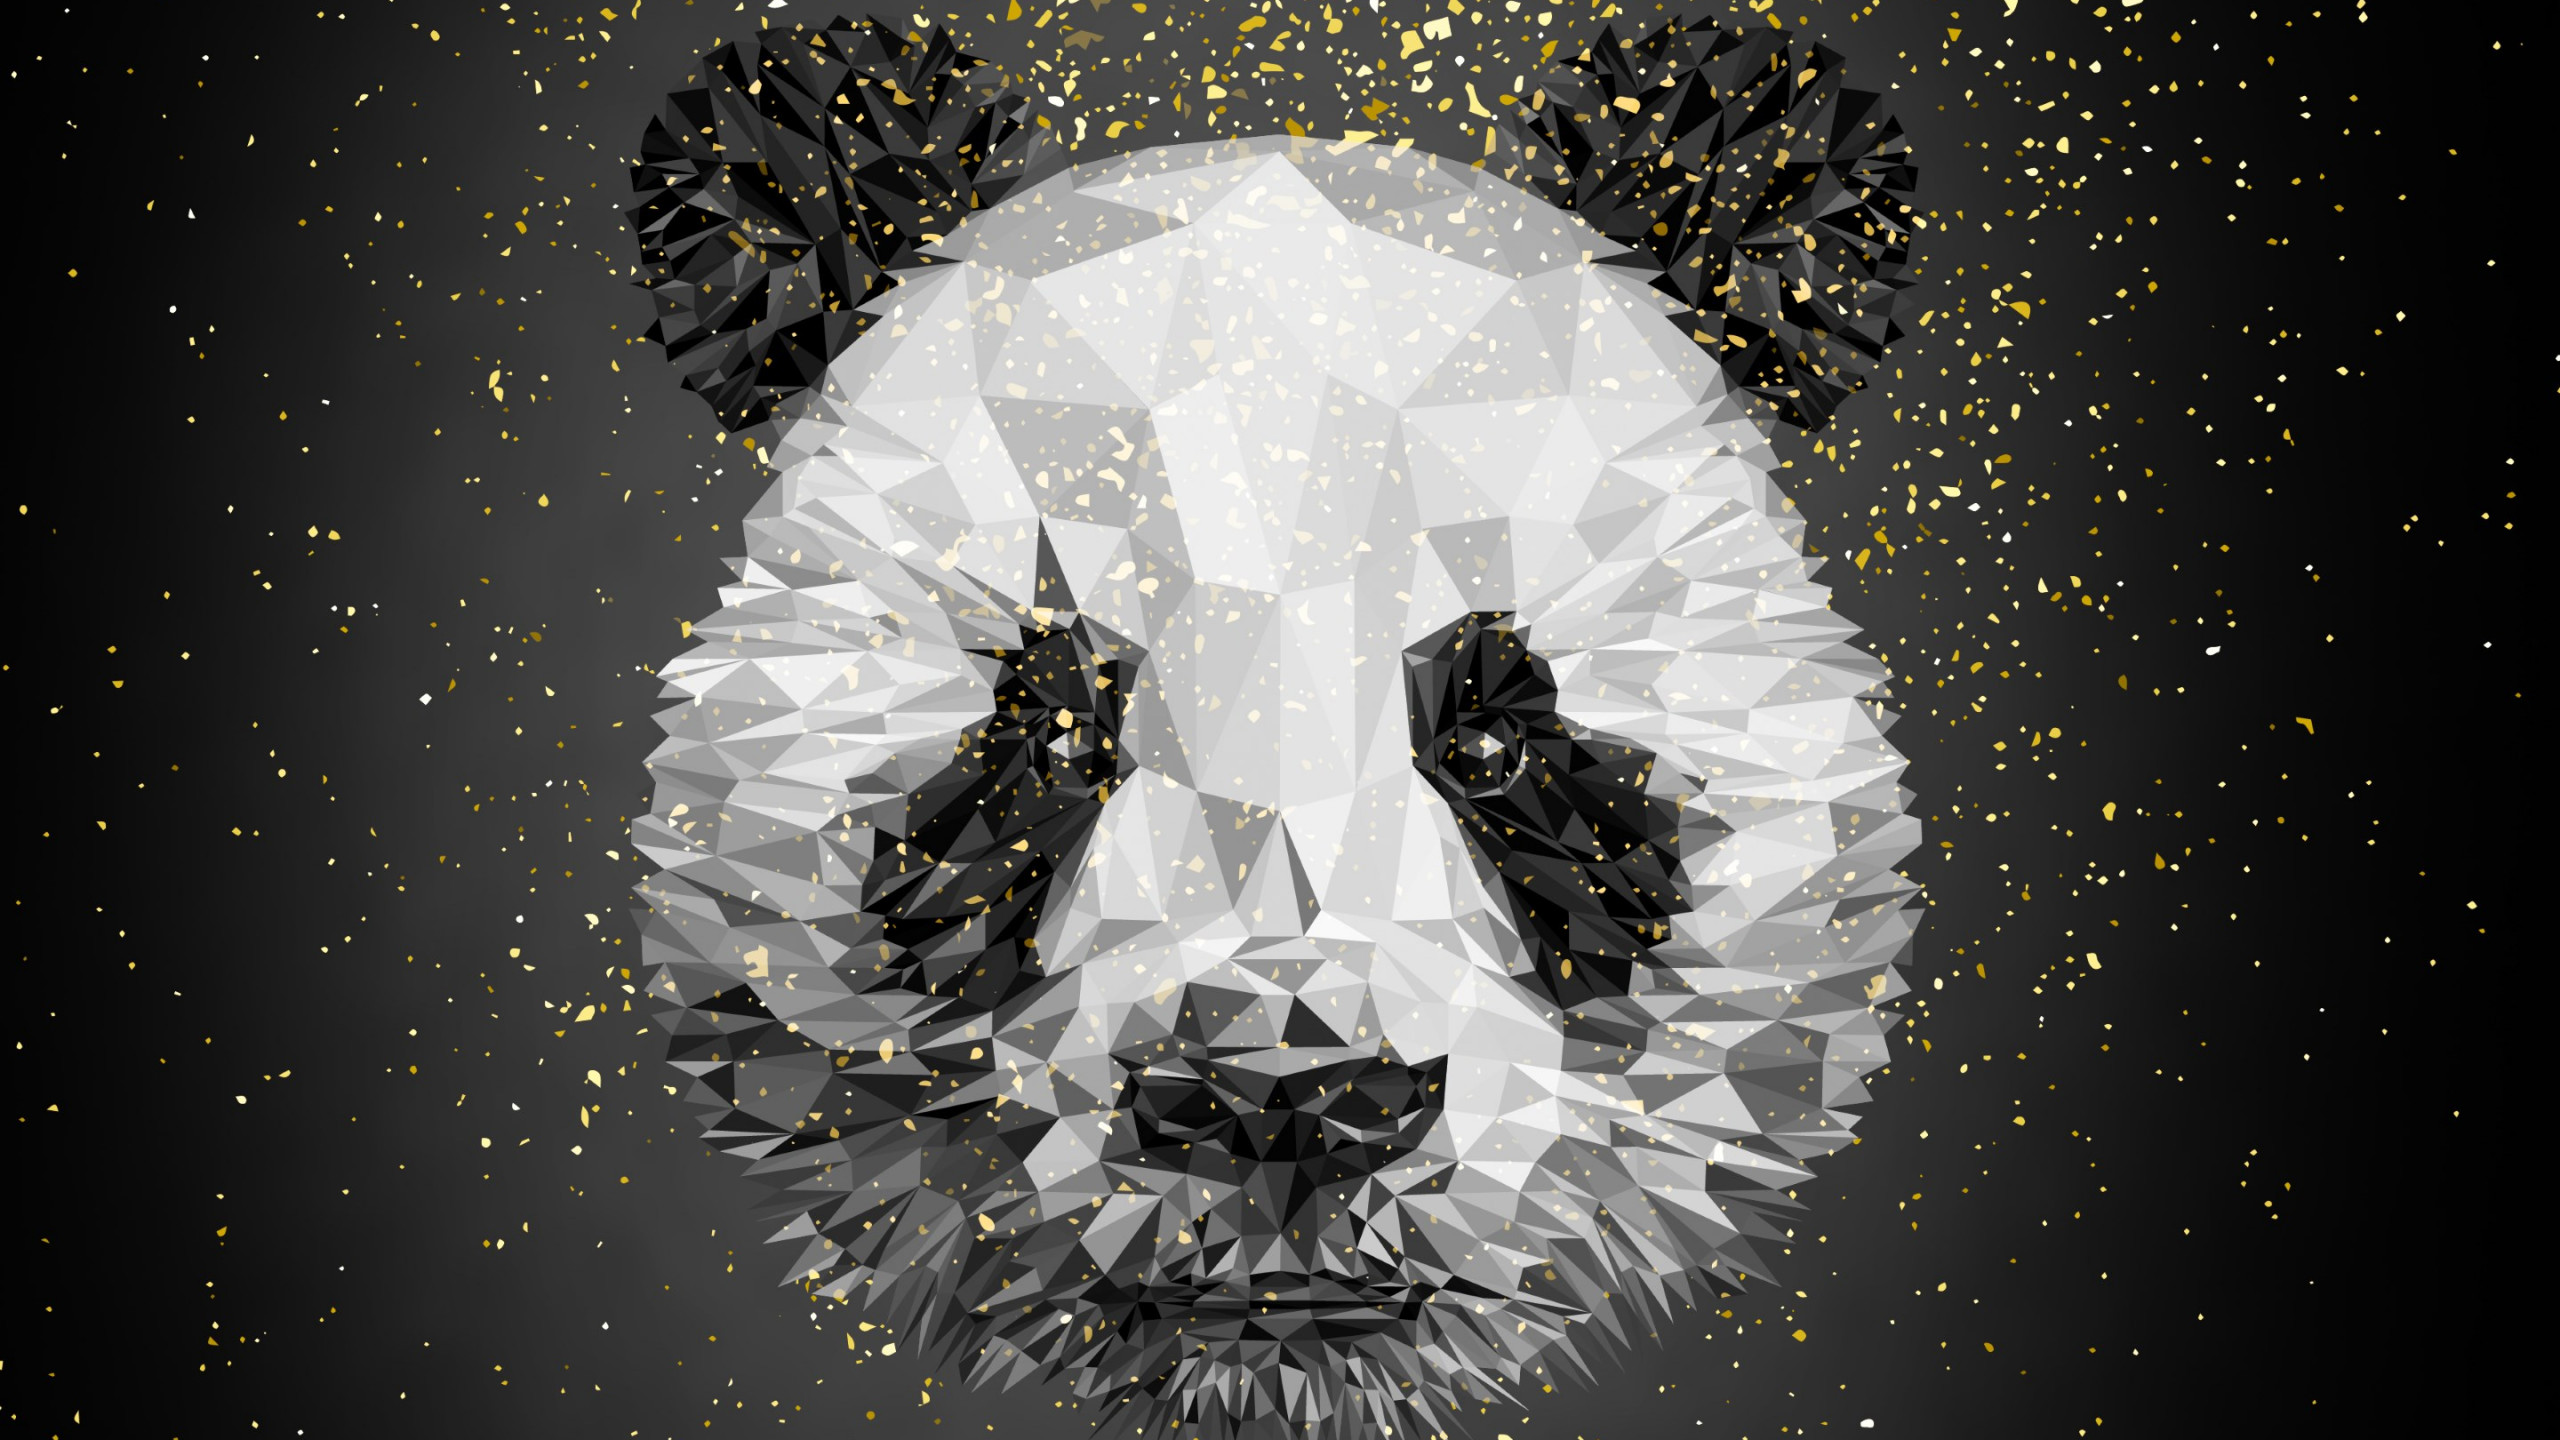 Panda bear illustration wallpaper 2560x1440